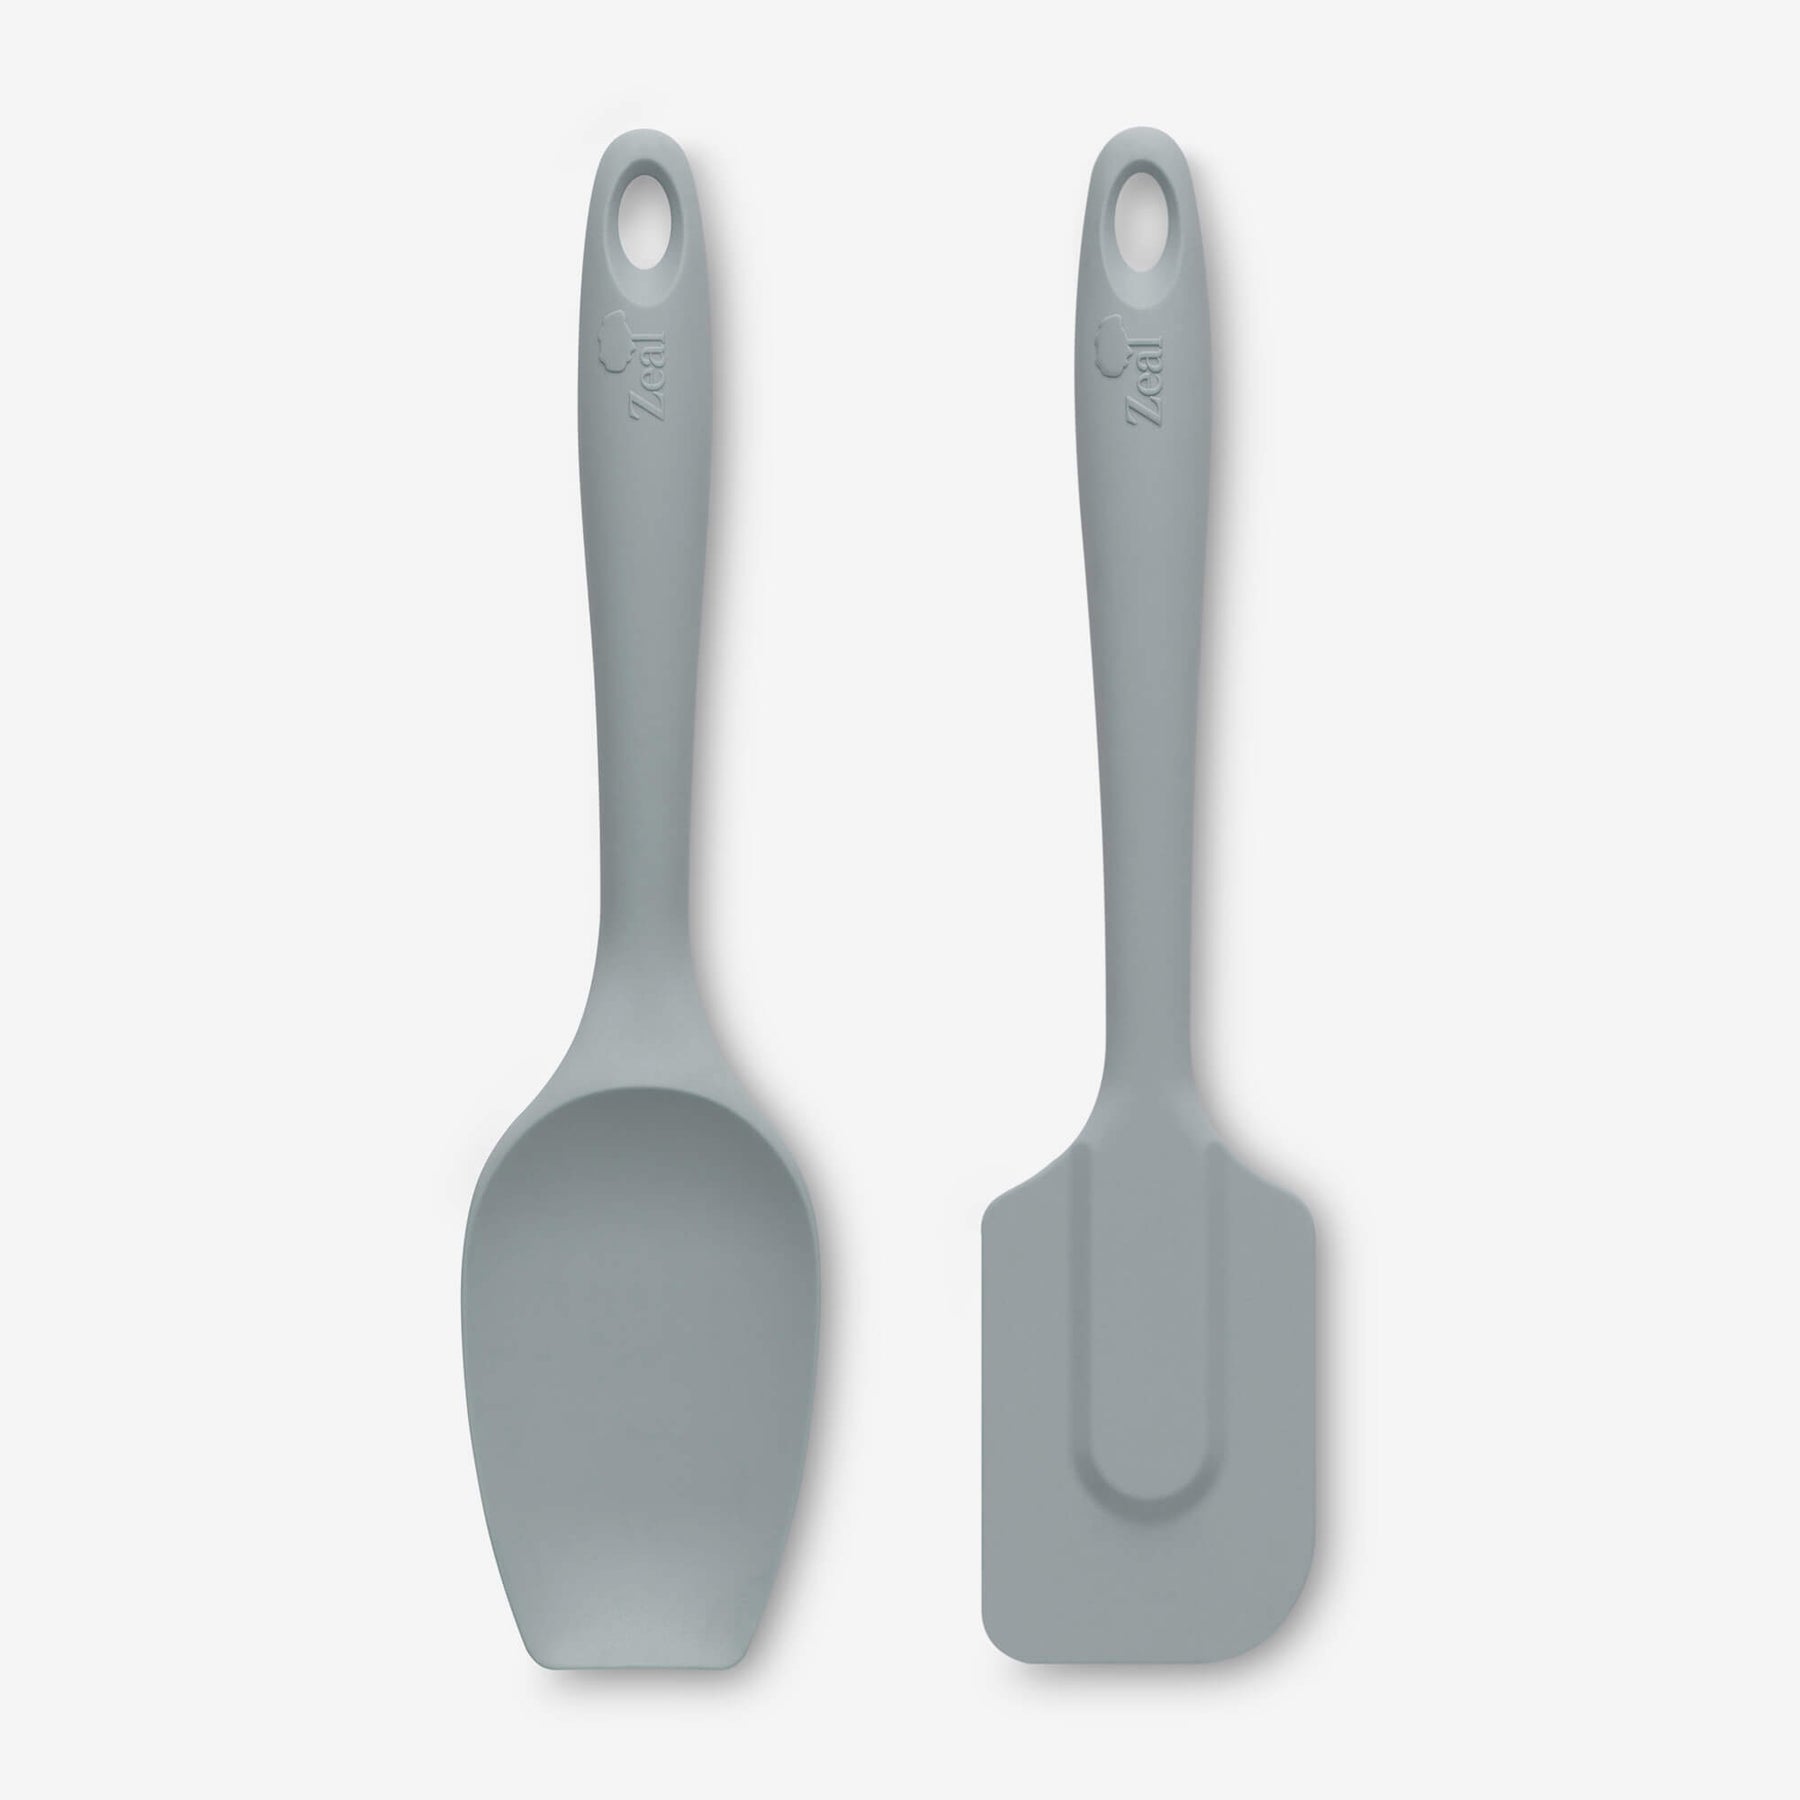 Silicone Spatula Spoon & Spatula Set